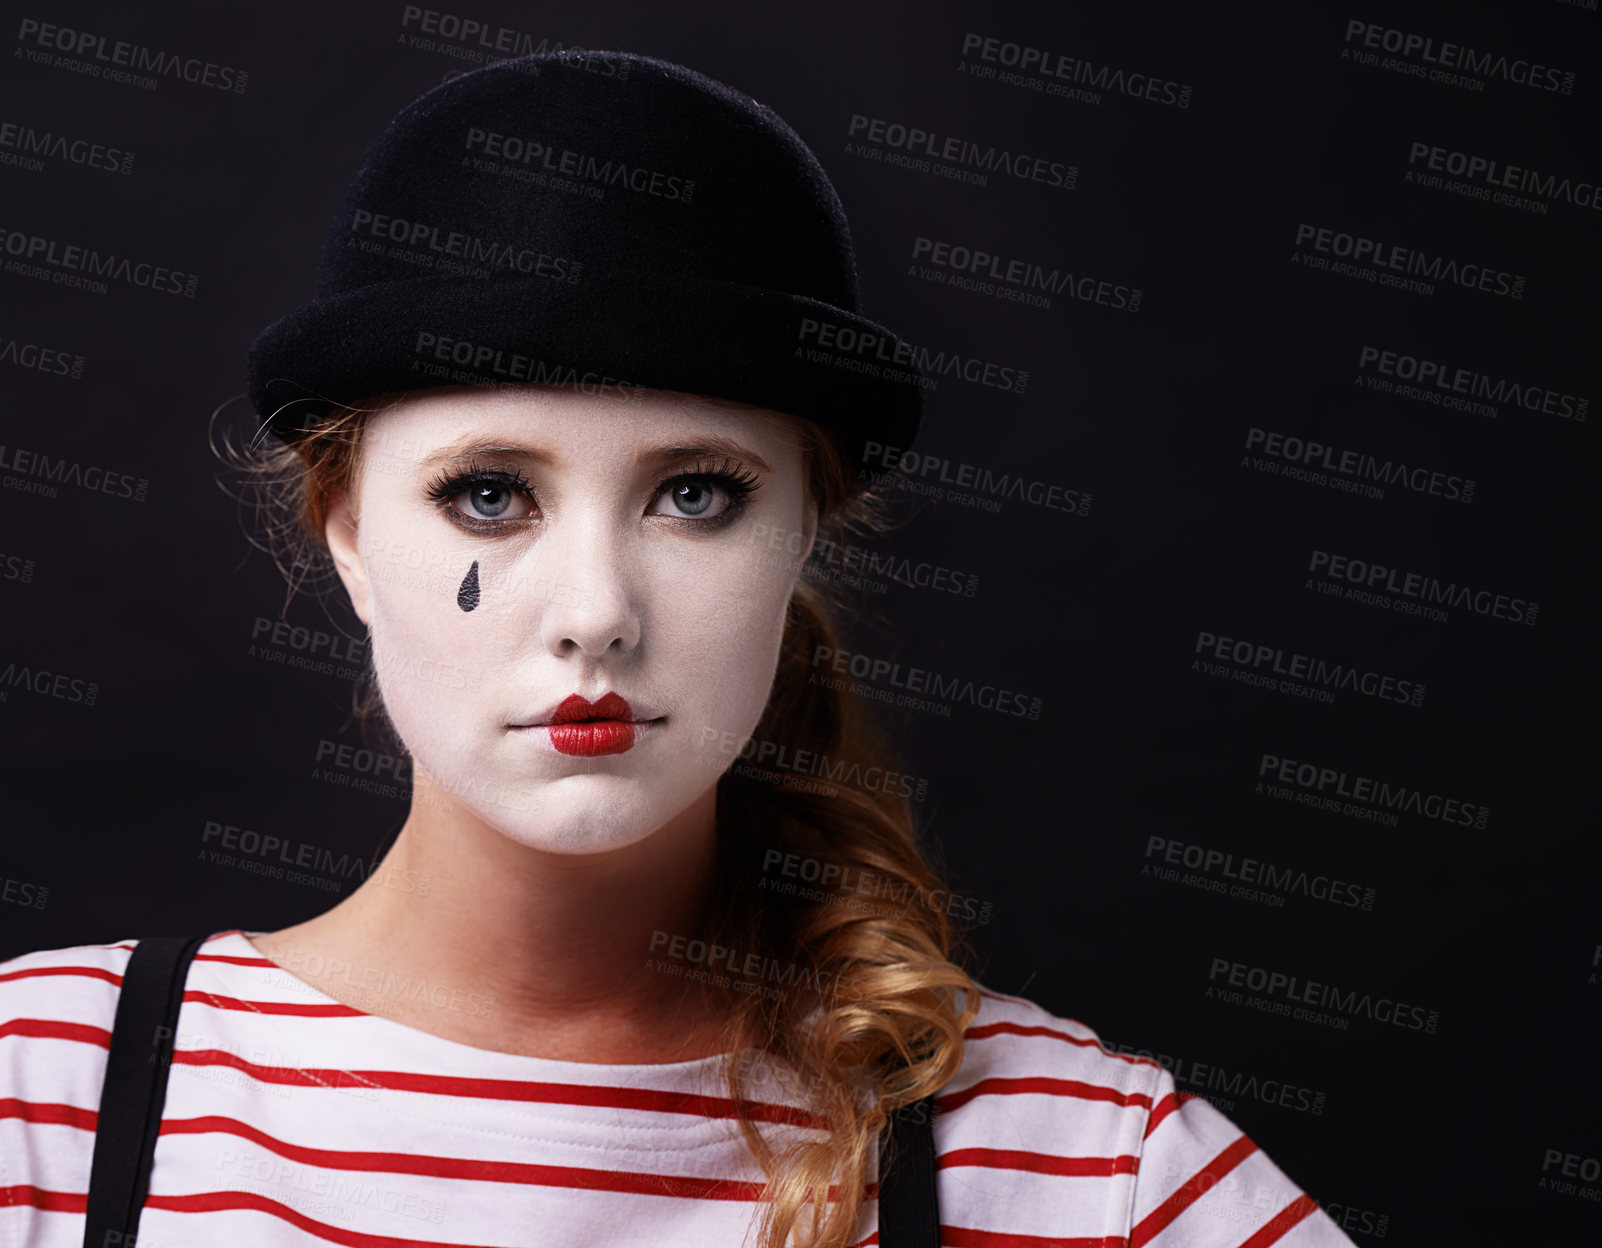 Buy stock photo Studio shot of a female mime